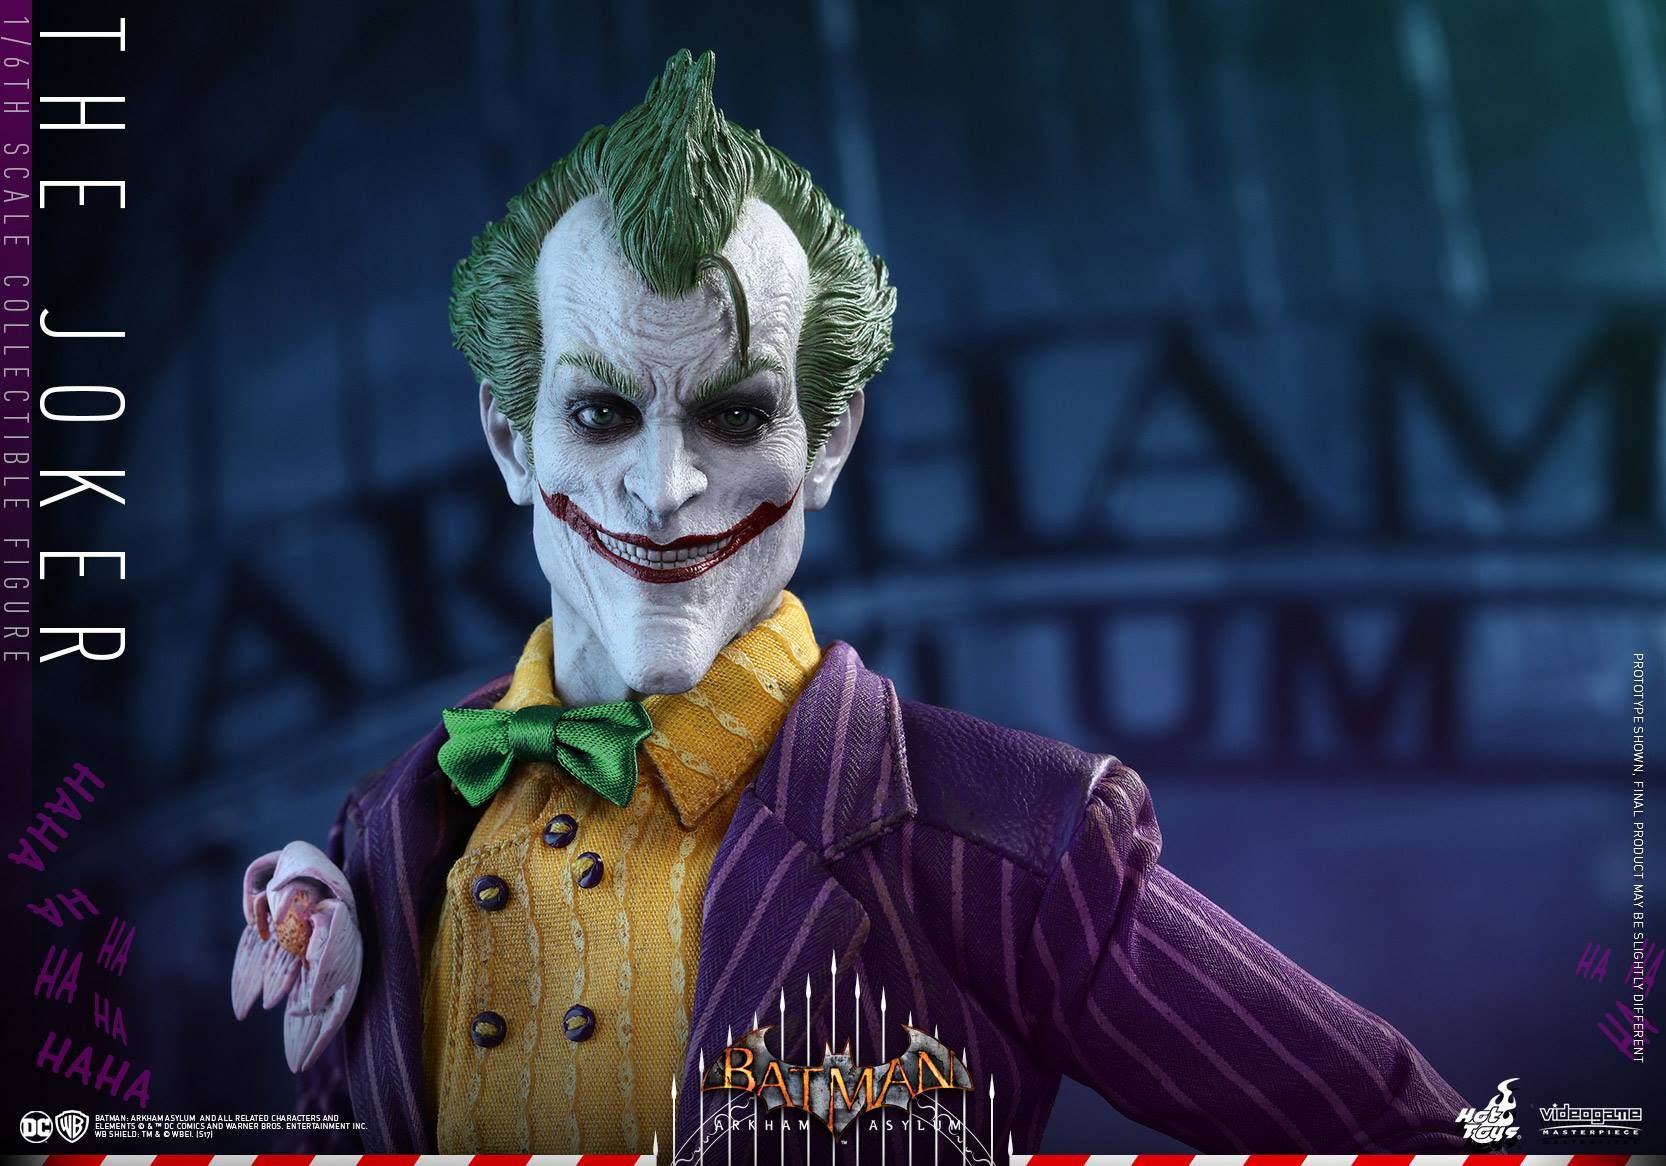 Hot Toys' New Joker Figure Escaped From Arkham Asylum